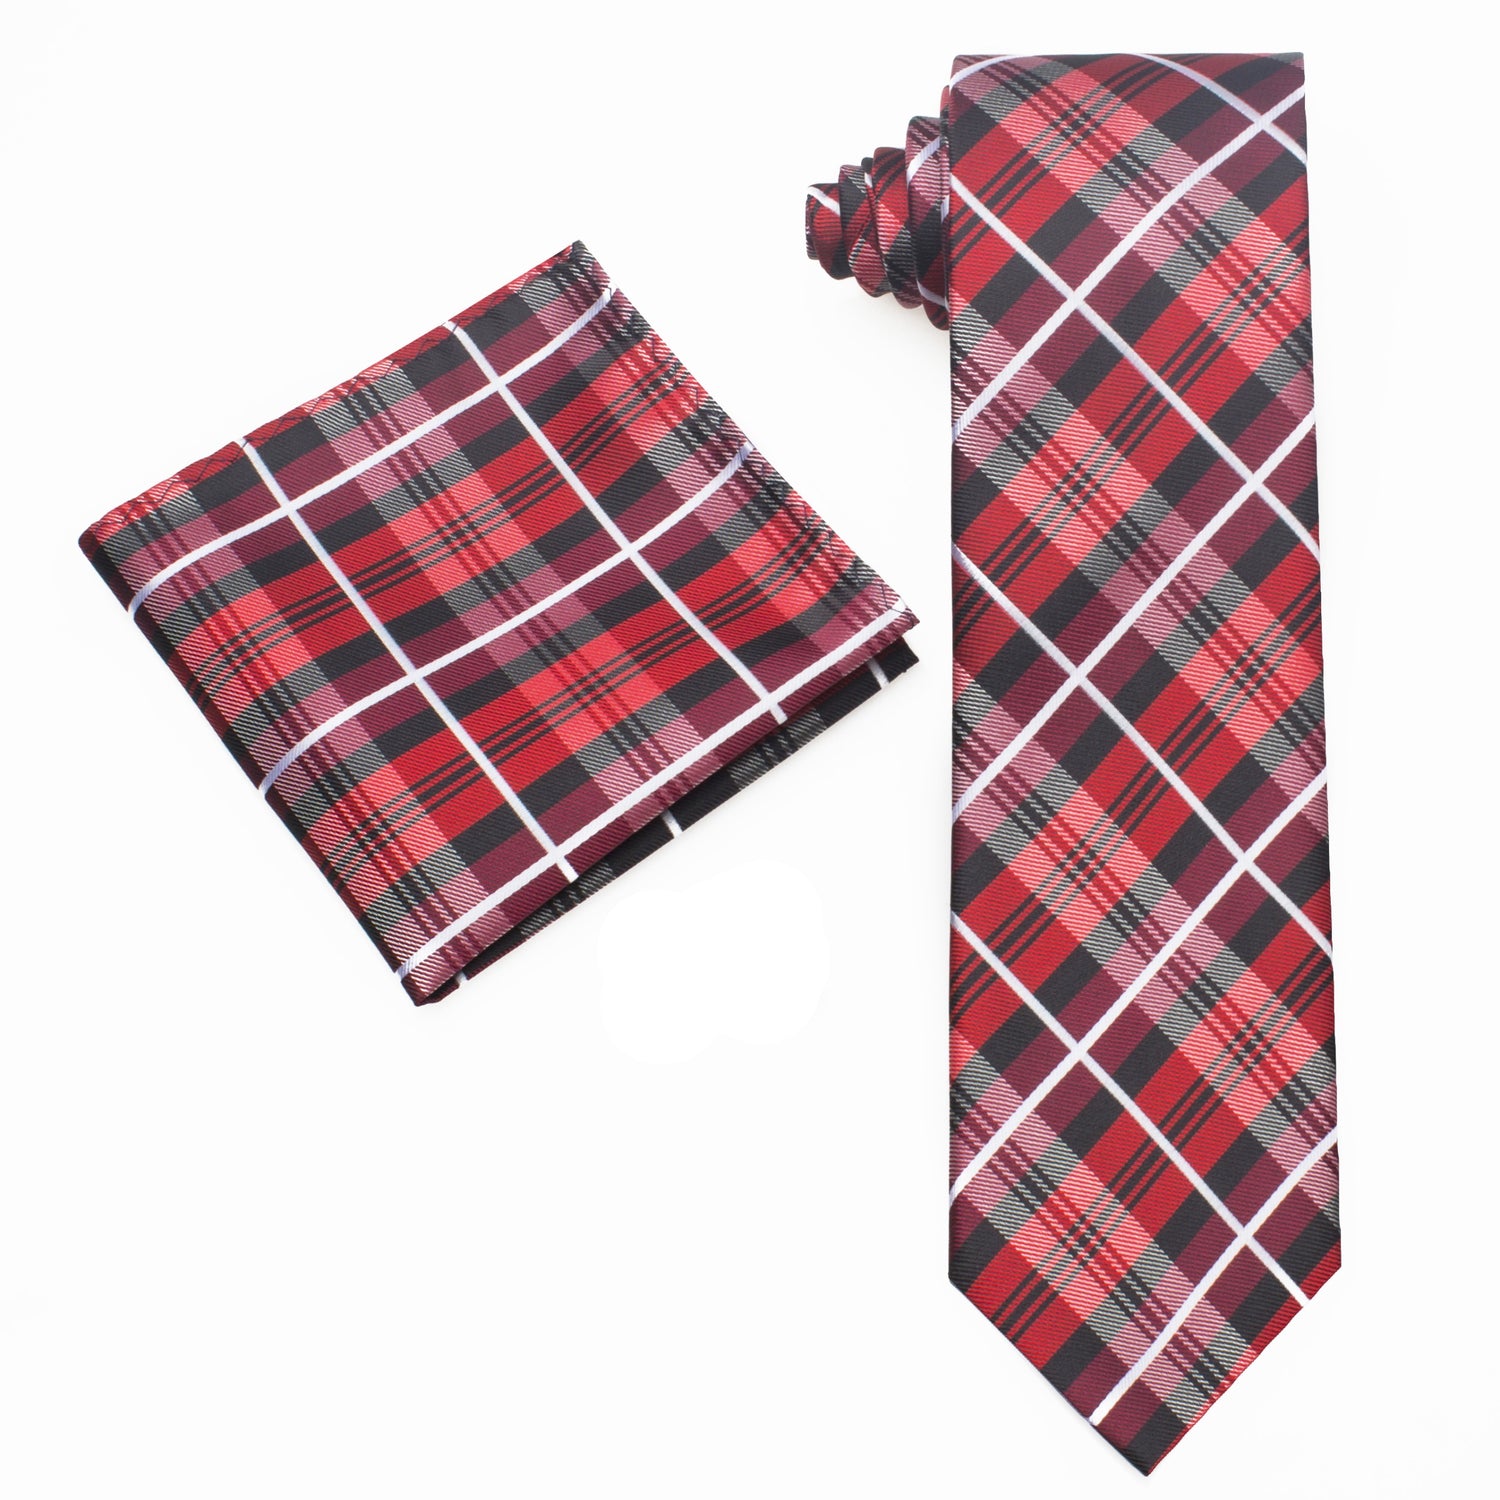 Alt View: A Red, Black Plaid Pattern Silk Necktie, Matching Pocket Square